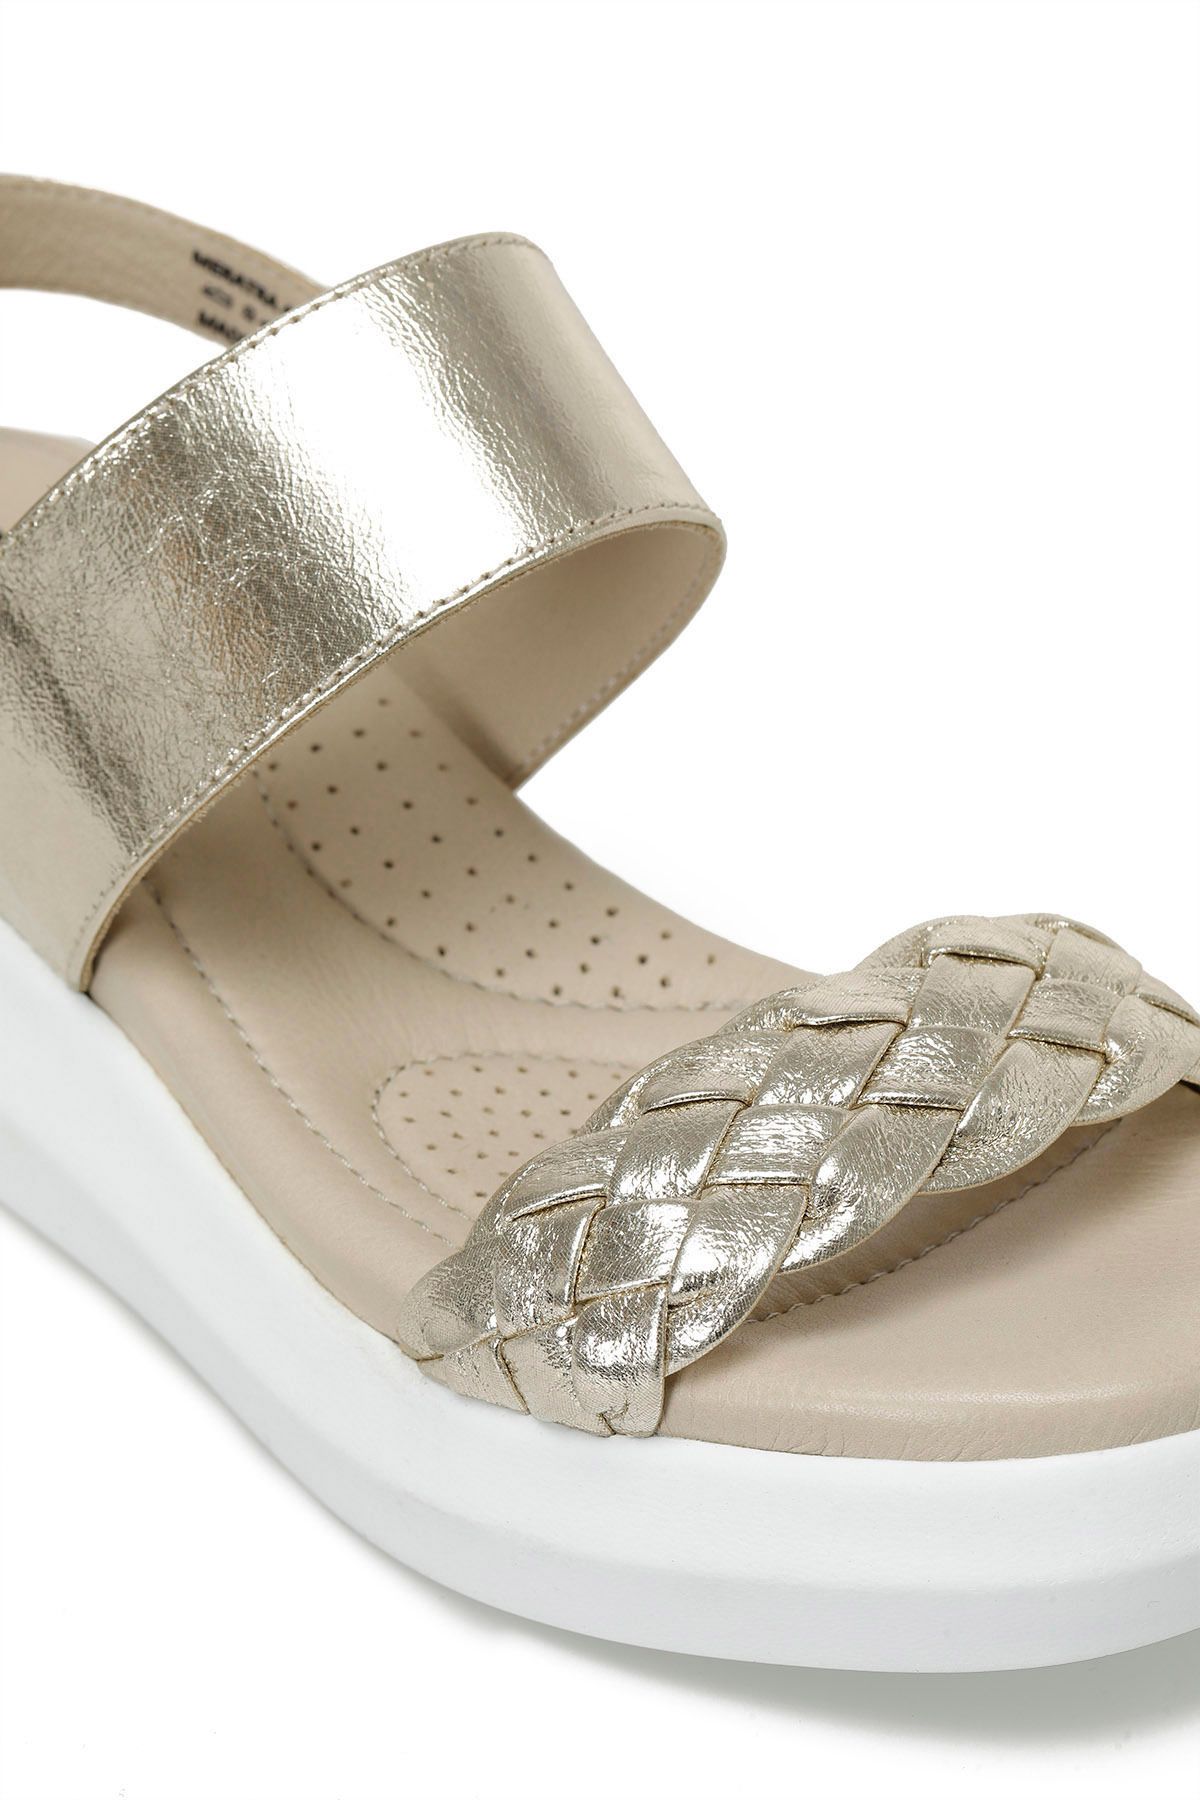 Nine West Meratra 4fx Gold Sandals Comfort